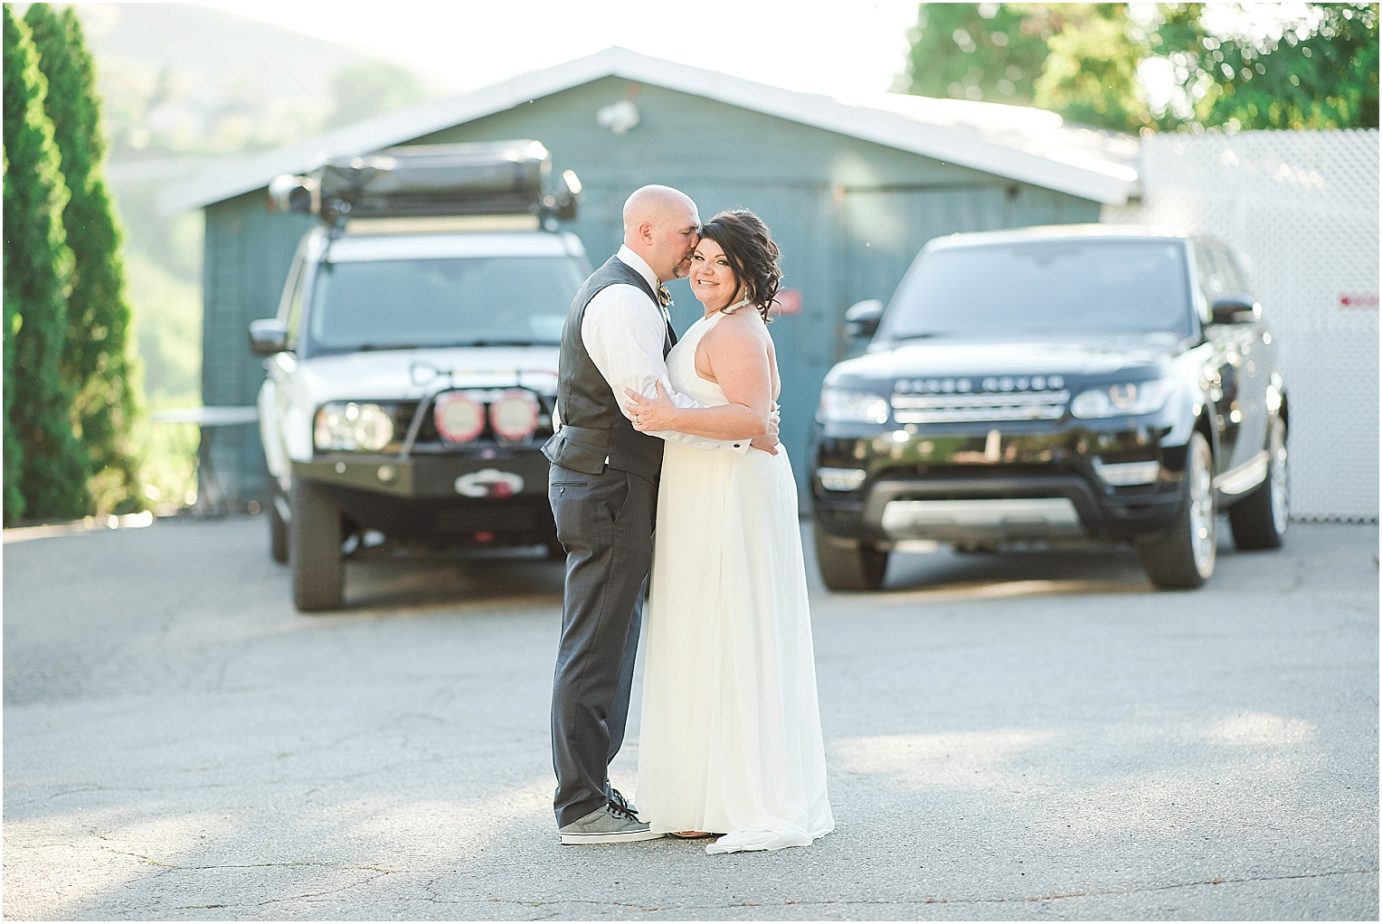 Warm Springs Inn Wedding Wenatchee WA Dana and Terri sunset photos with Land Rovers